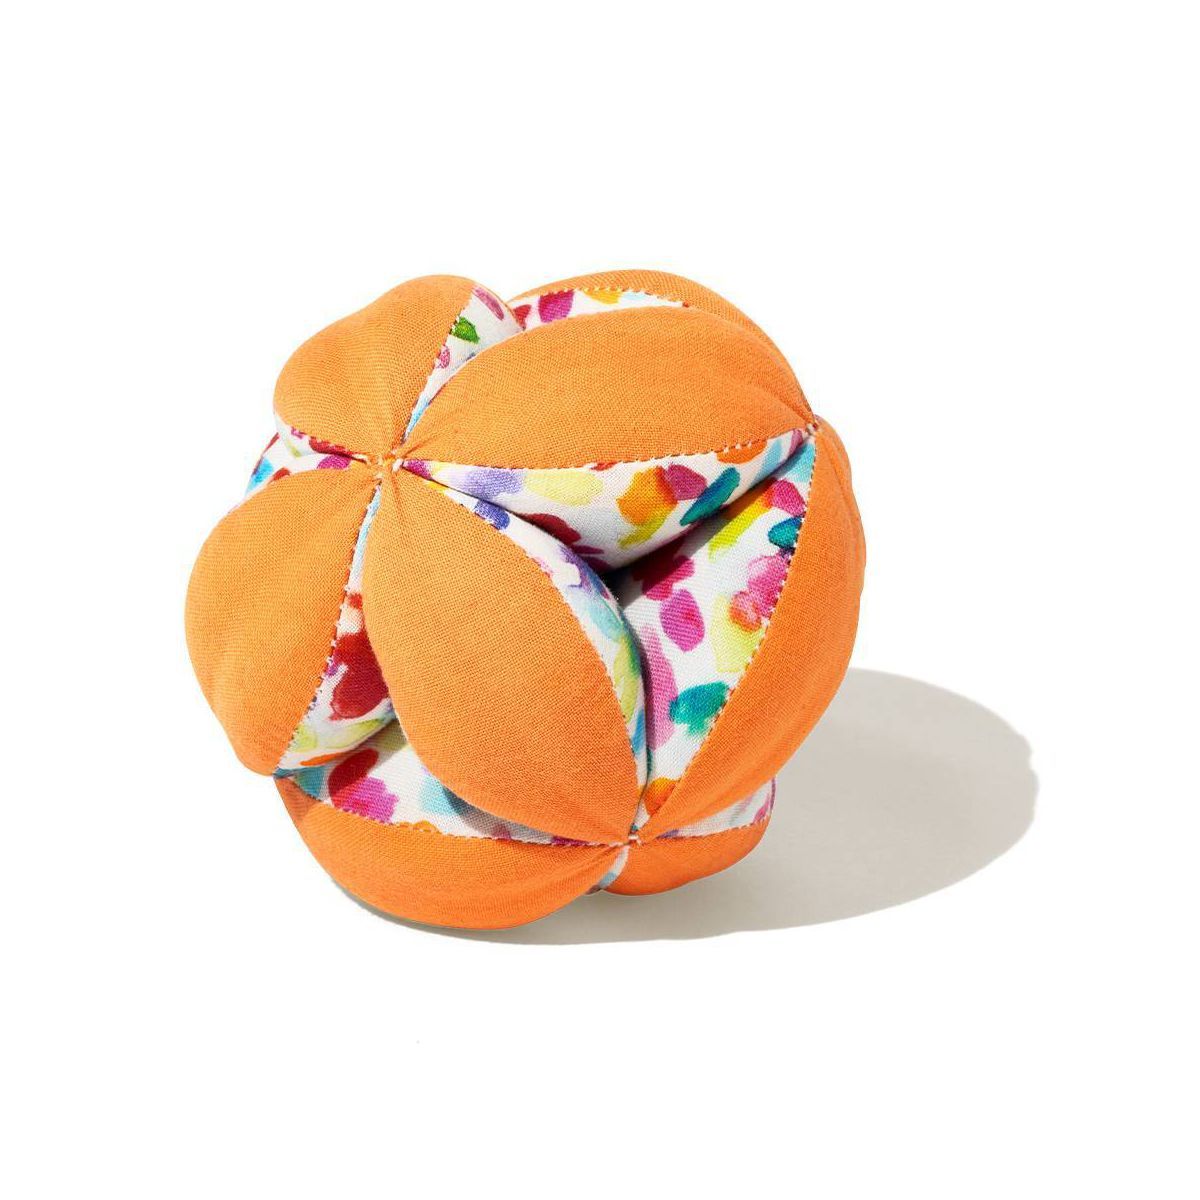 Lovevery Organic Montessori Ball Baby Toy | Target